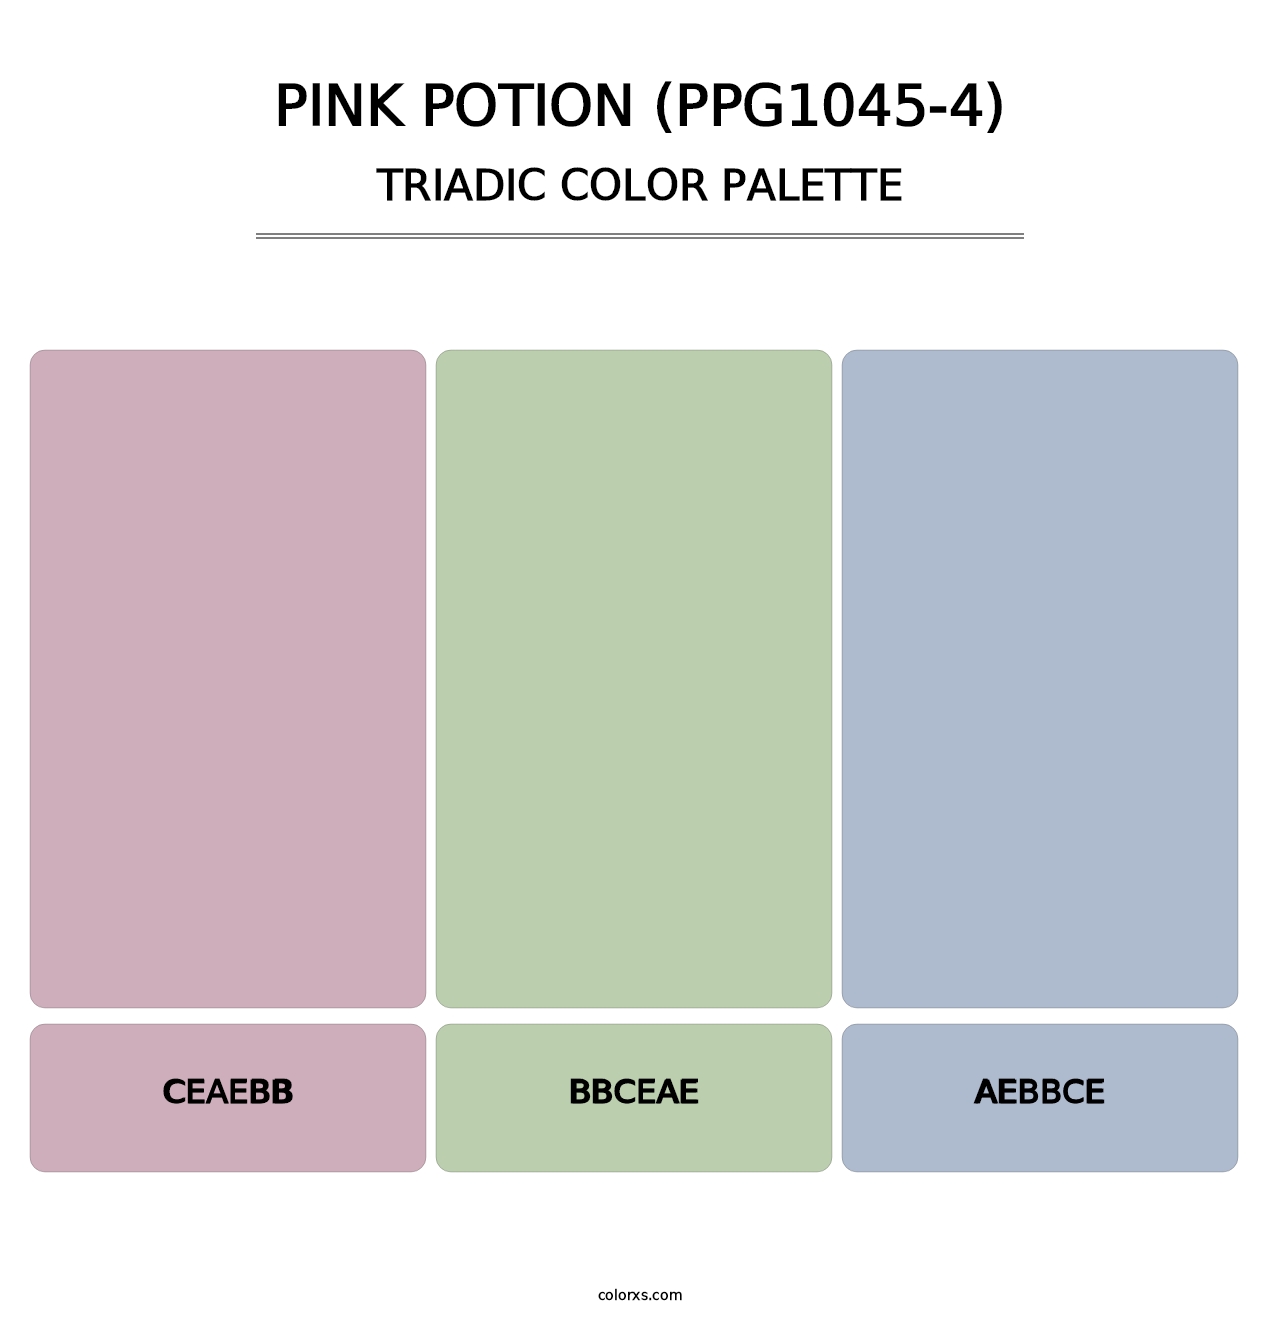 Pink Potion (PPG1045-4) - Triadic Color Palette